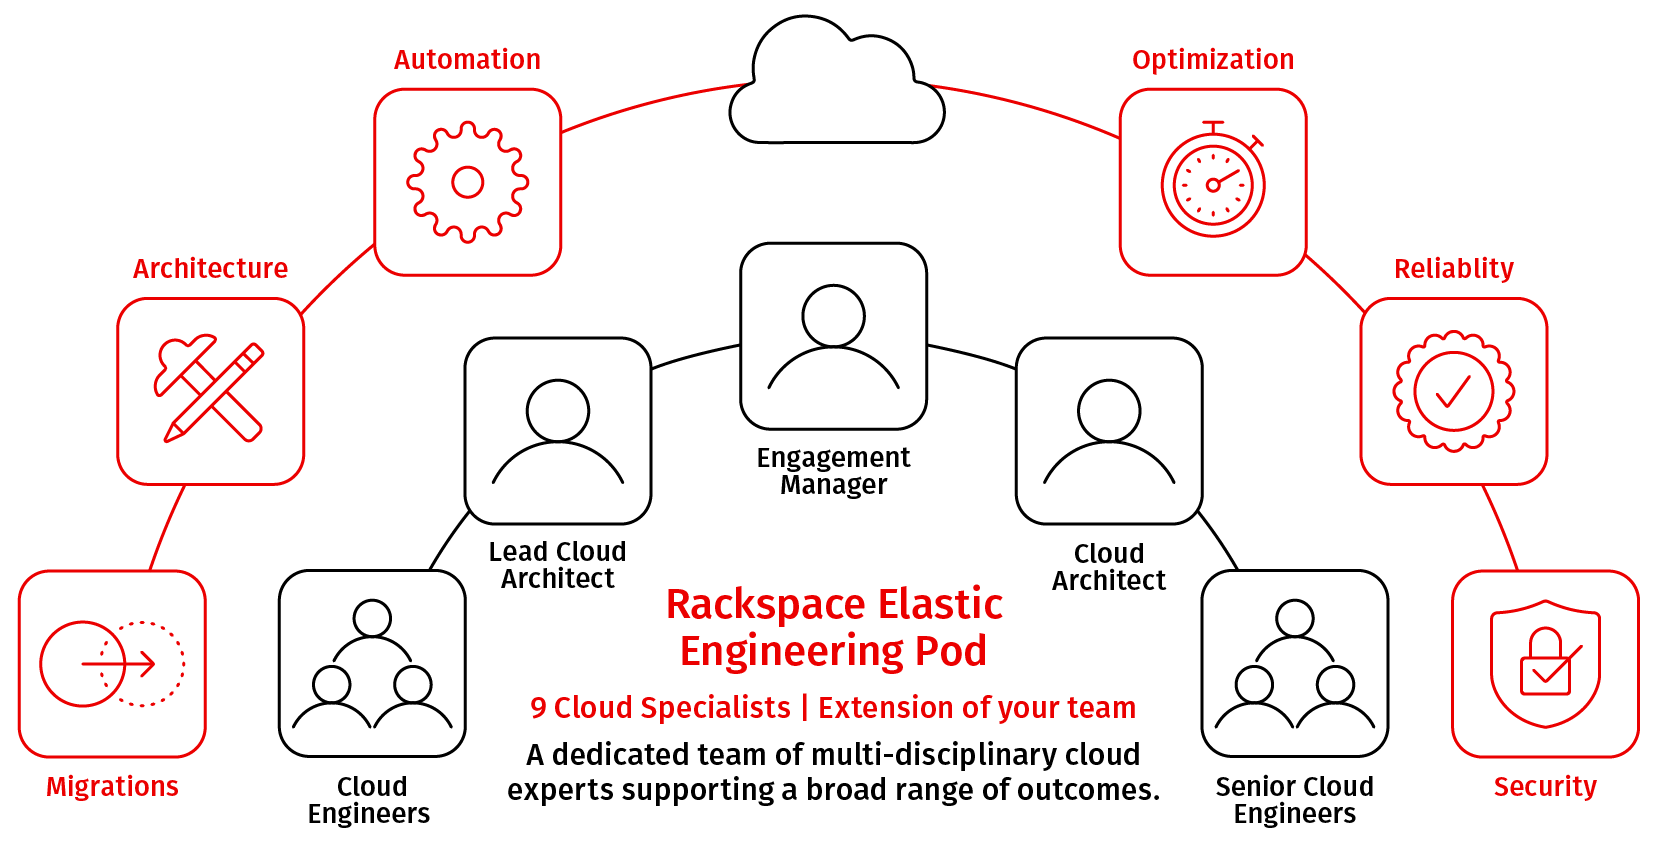 Rackspace Elastic Engineering Pod - Cloud Engineers, lead Cloud Architect, Engagement Manager, Cloud Architect and Senior Cloud Engineers